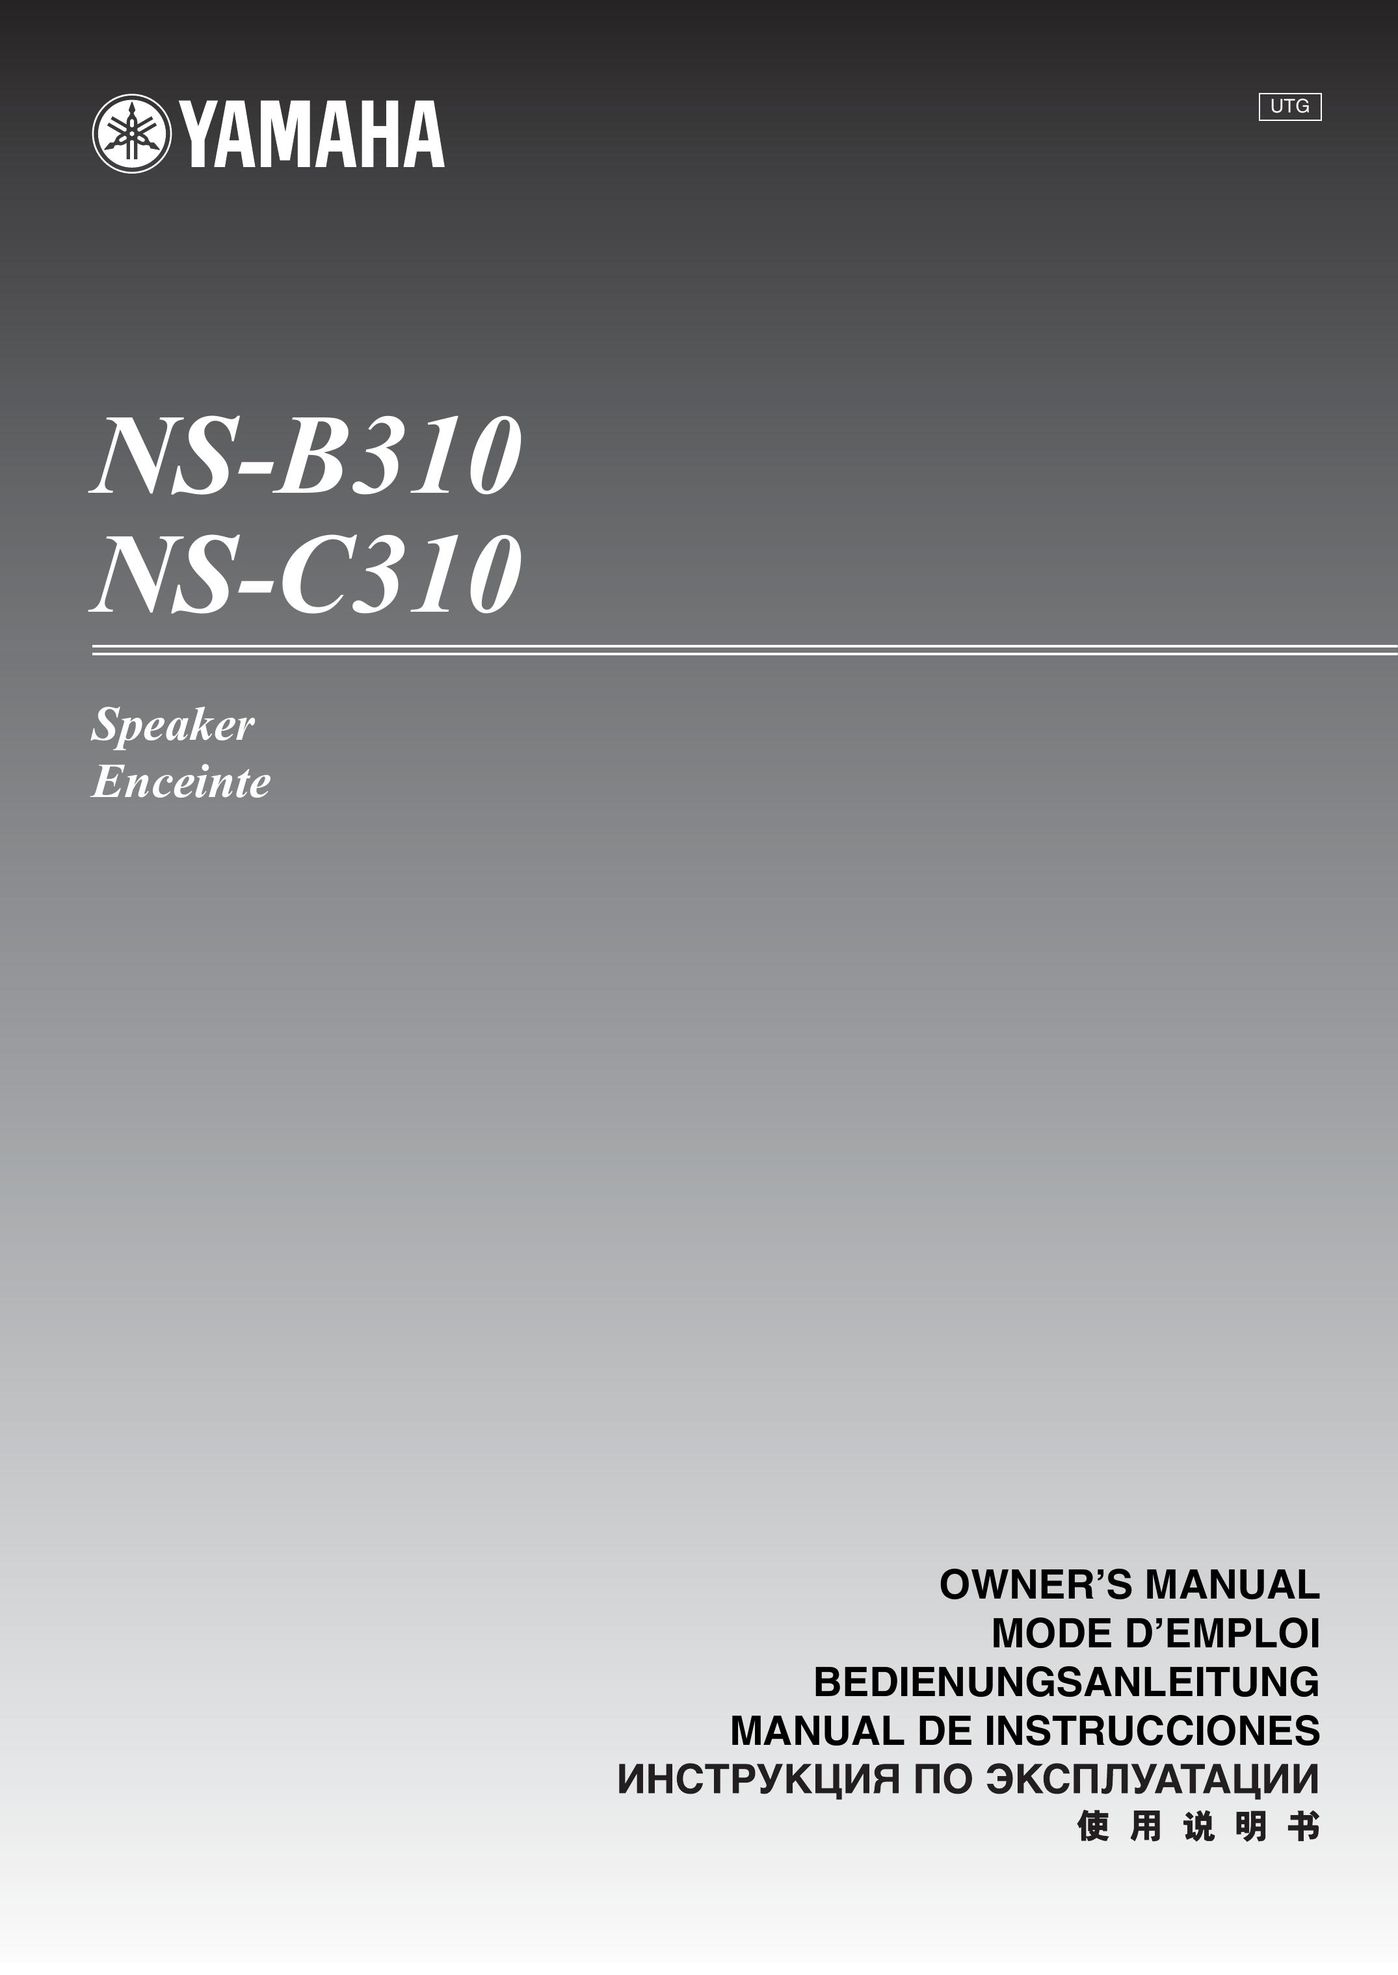 Yamaha NS-C310 Car Speaker User Manual